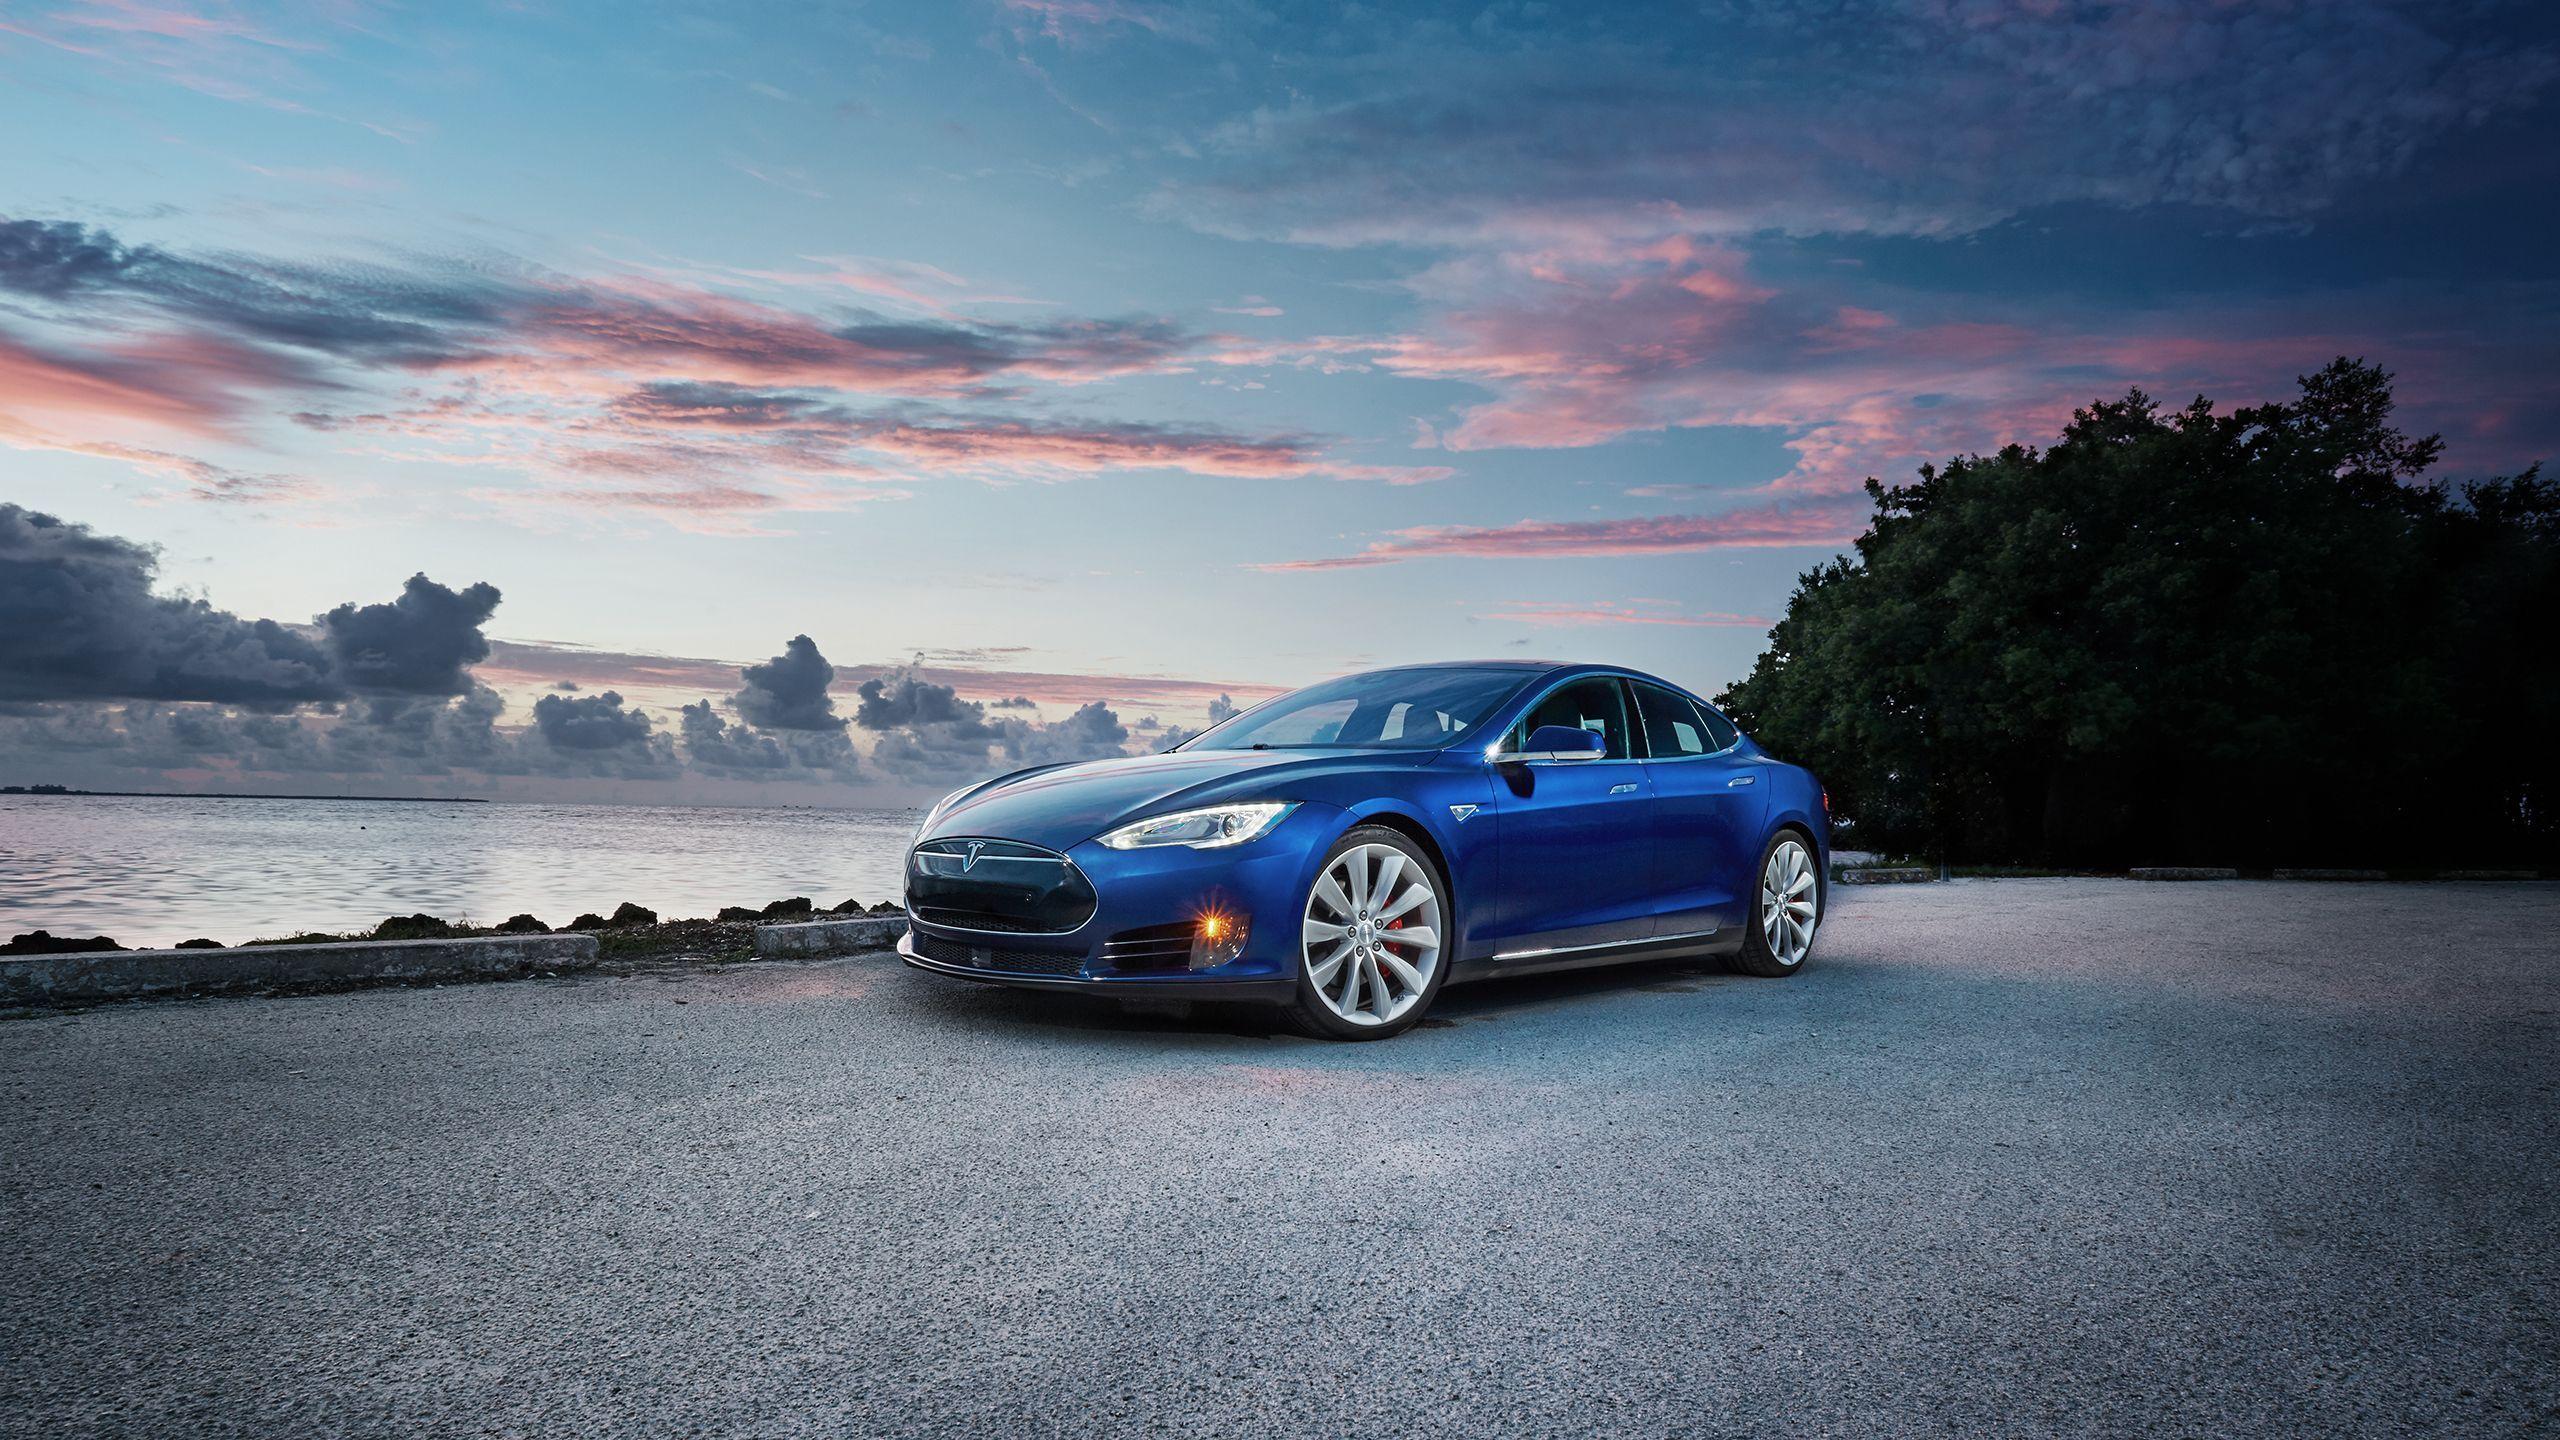 Wallpaper Wednesday: Tesla Model S